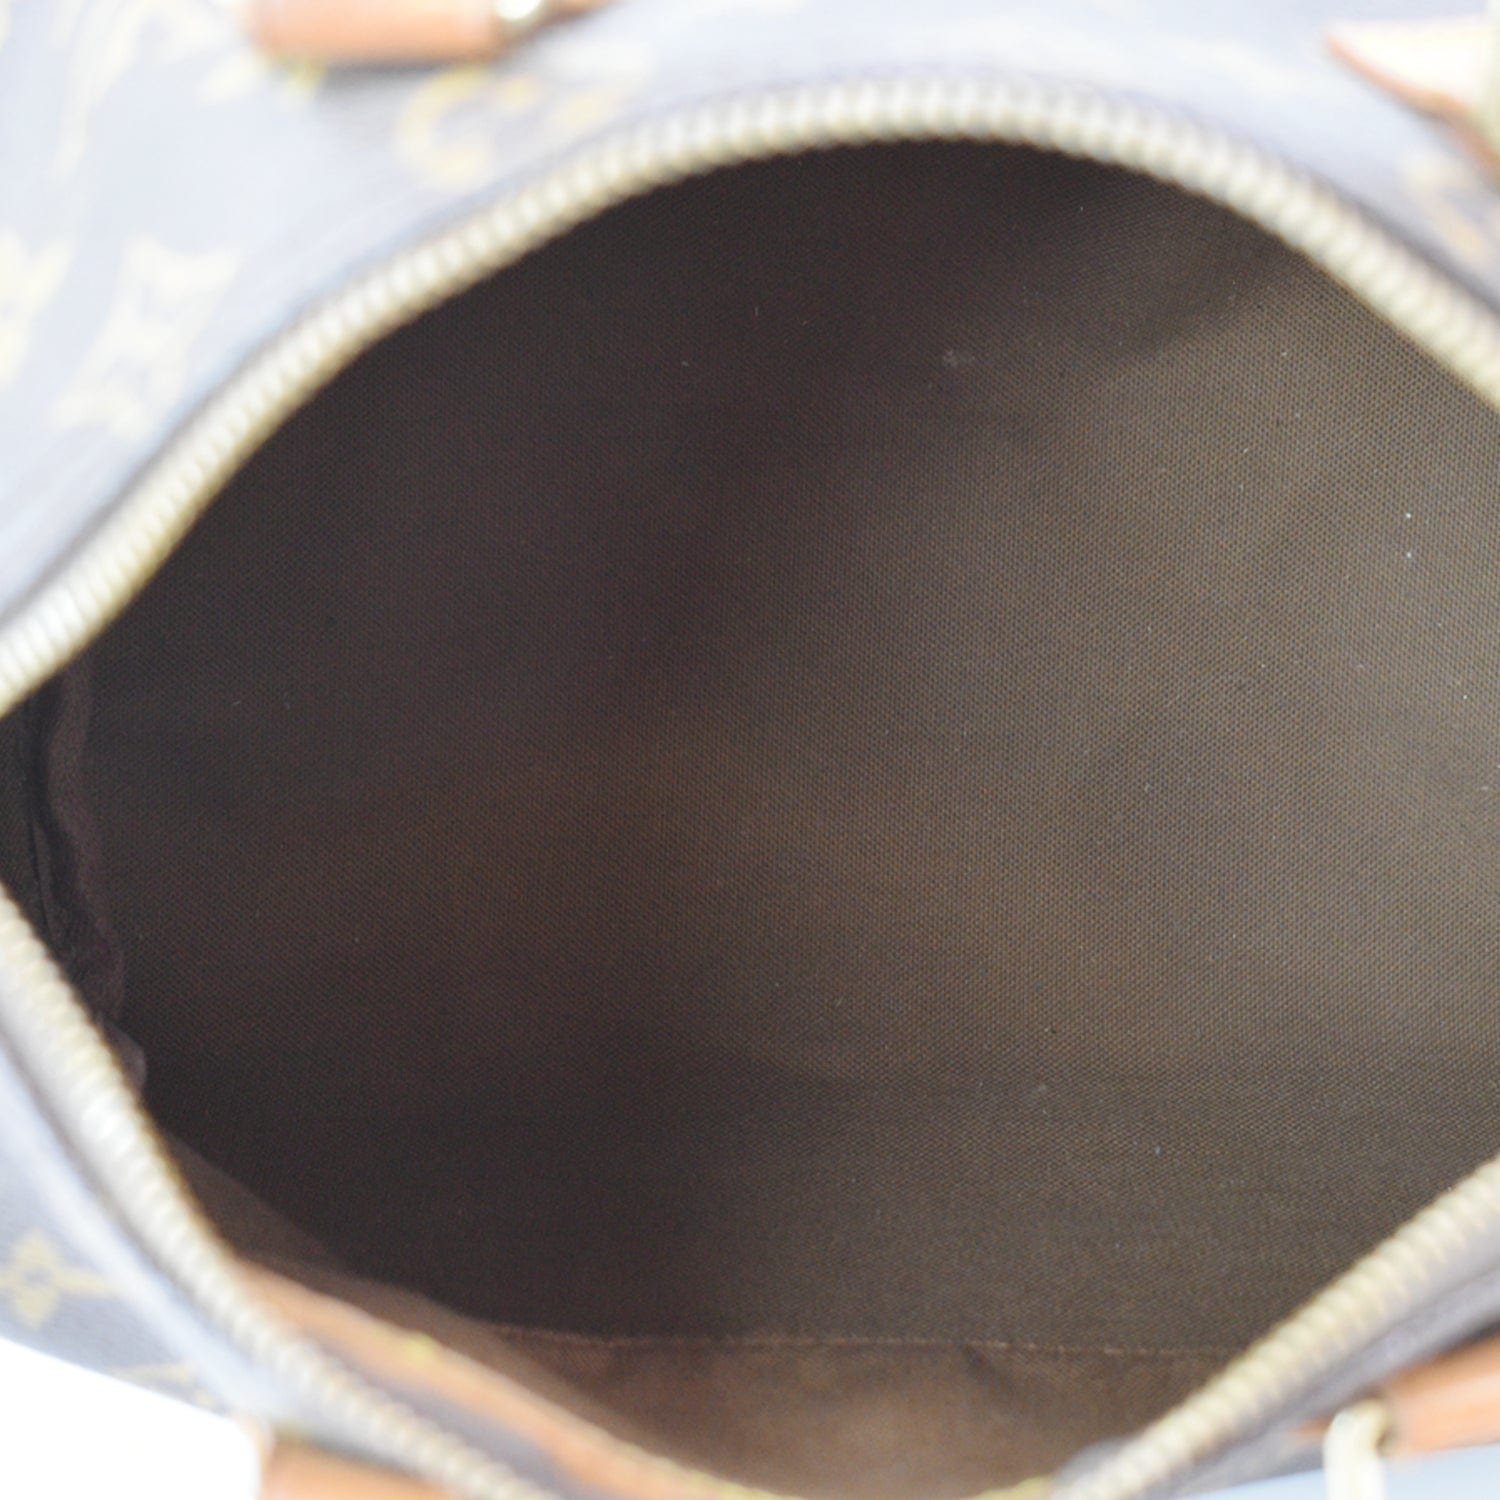 Louis Vuitton LV Speedy 25 Used Handbag Monogram Leather M41109 Vintage  #AG545 Y